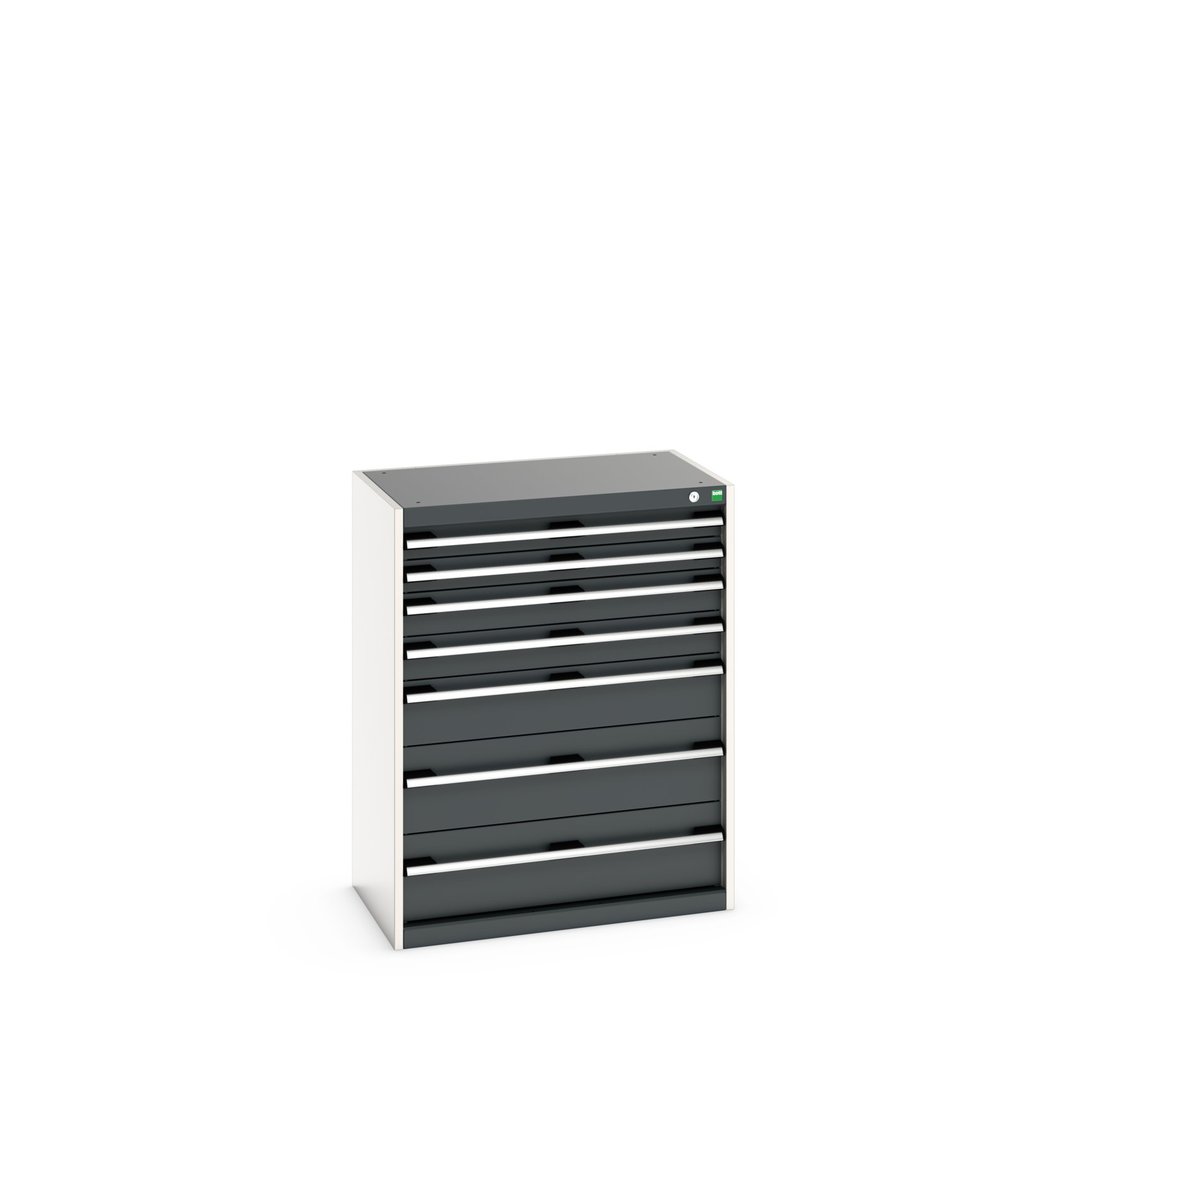 40012100. - cubio drawer cabinet